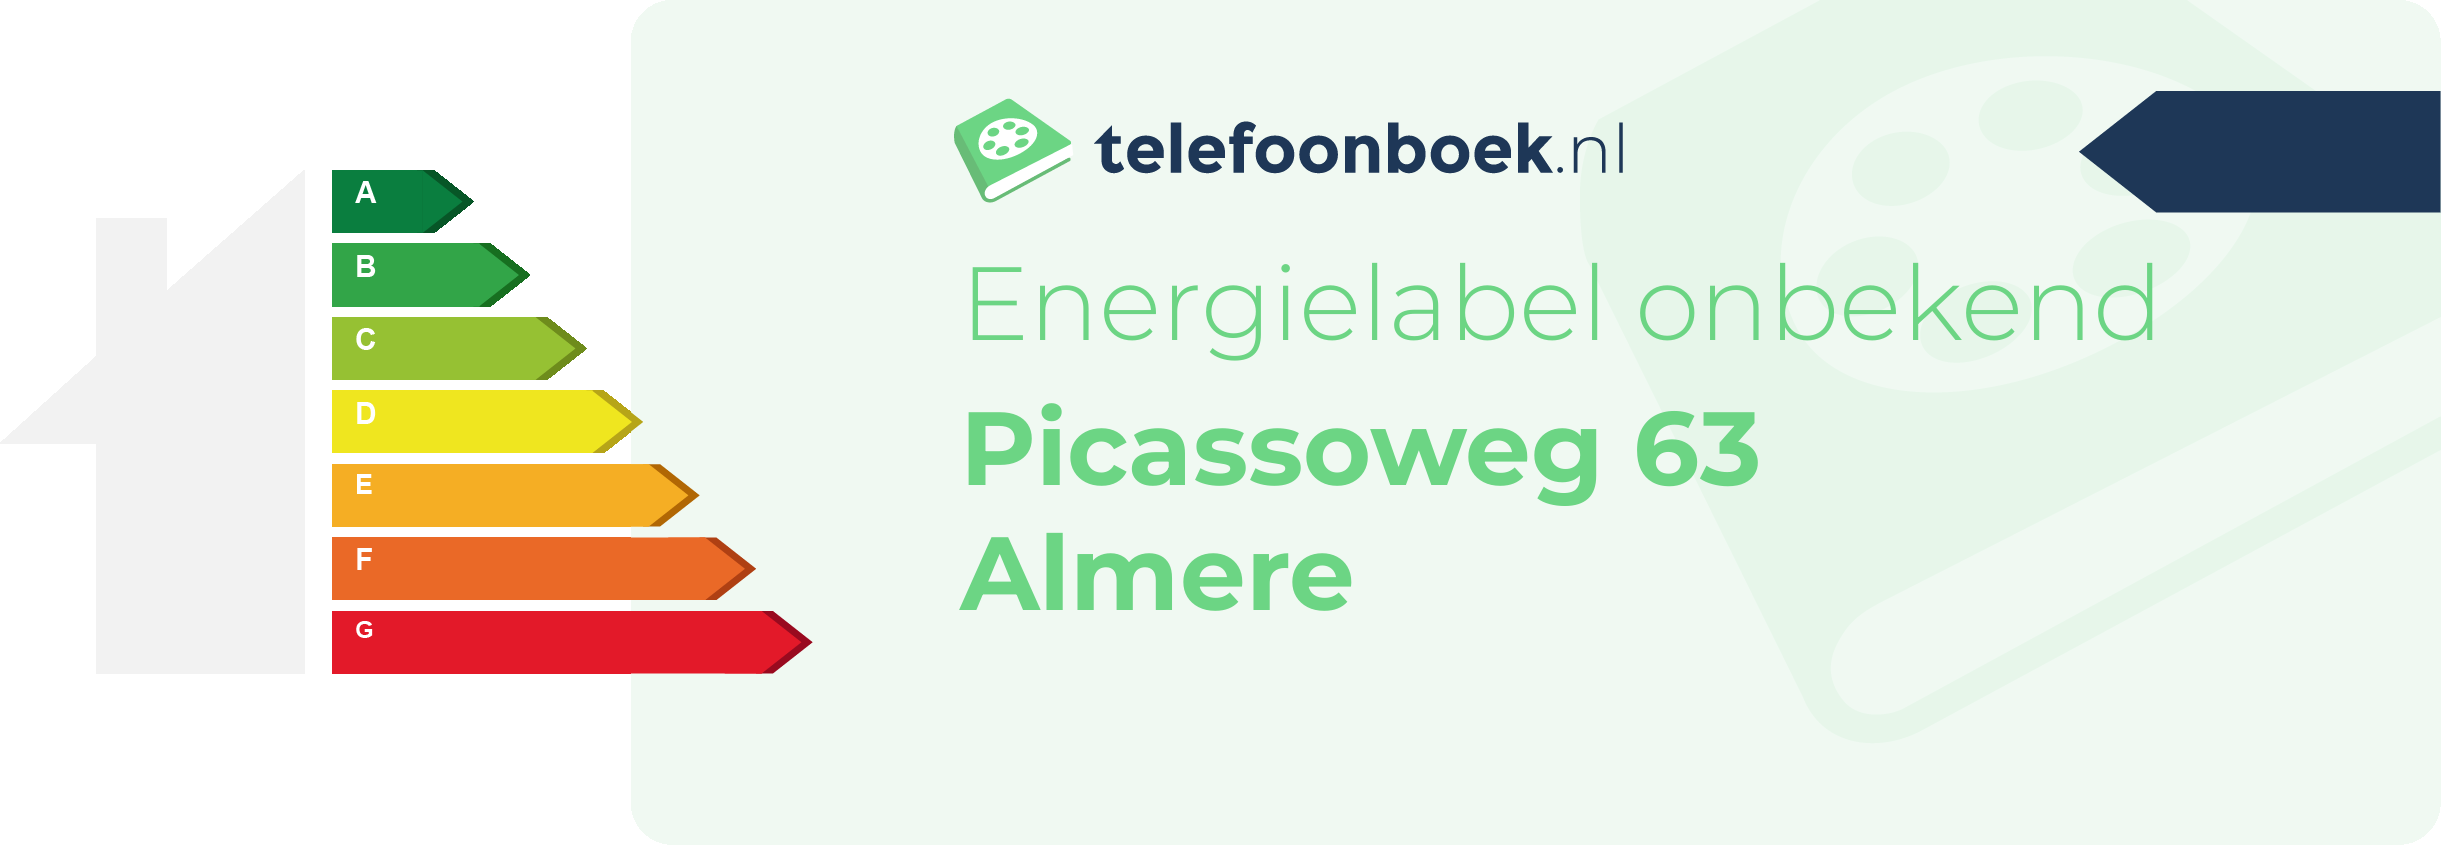 Energielabel Picassoweg 63 Almere